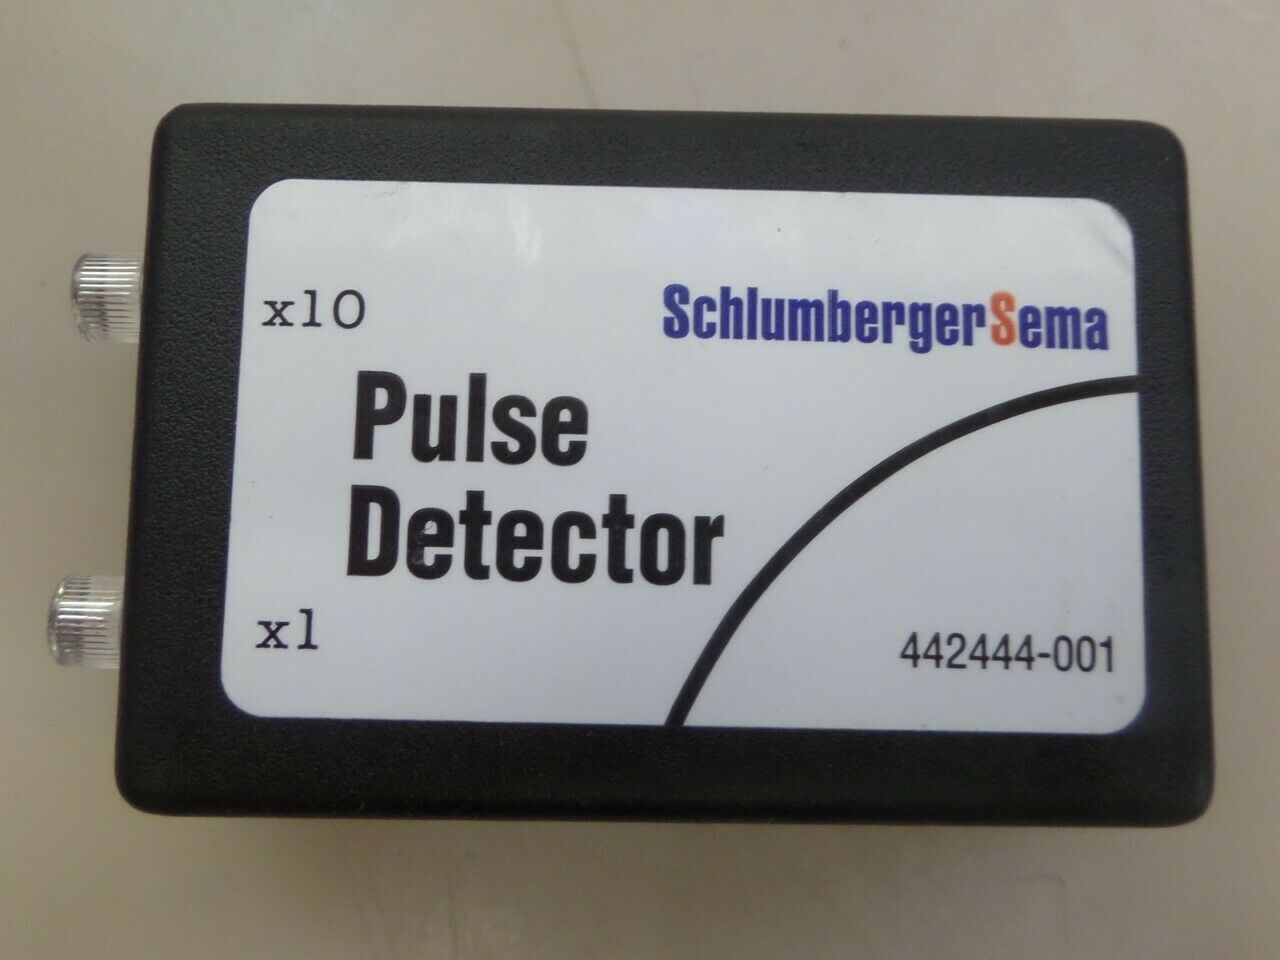 Schlumberger Sema 442444-001 Pulse Detector